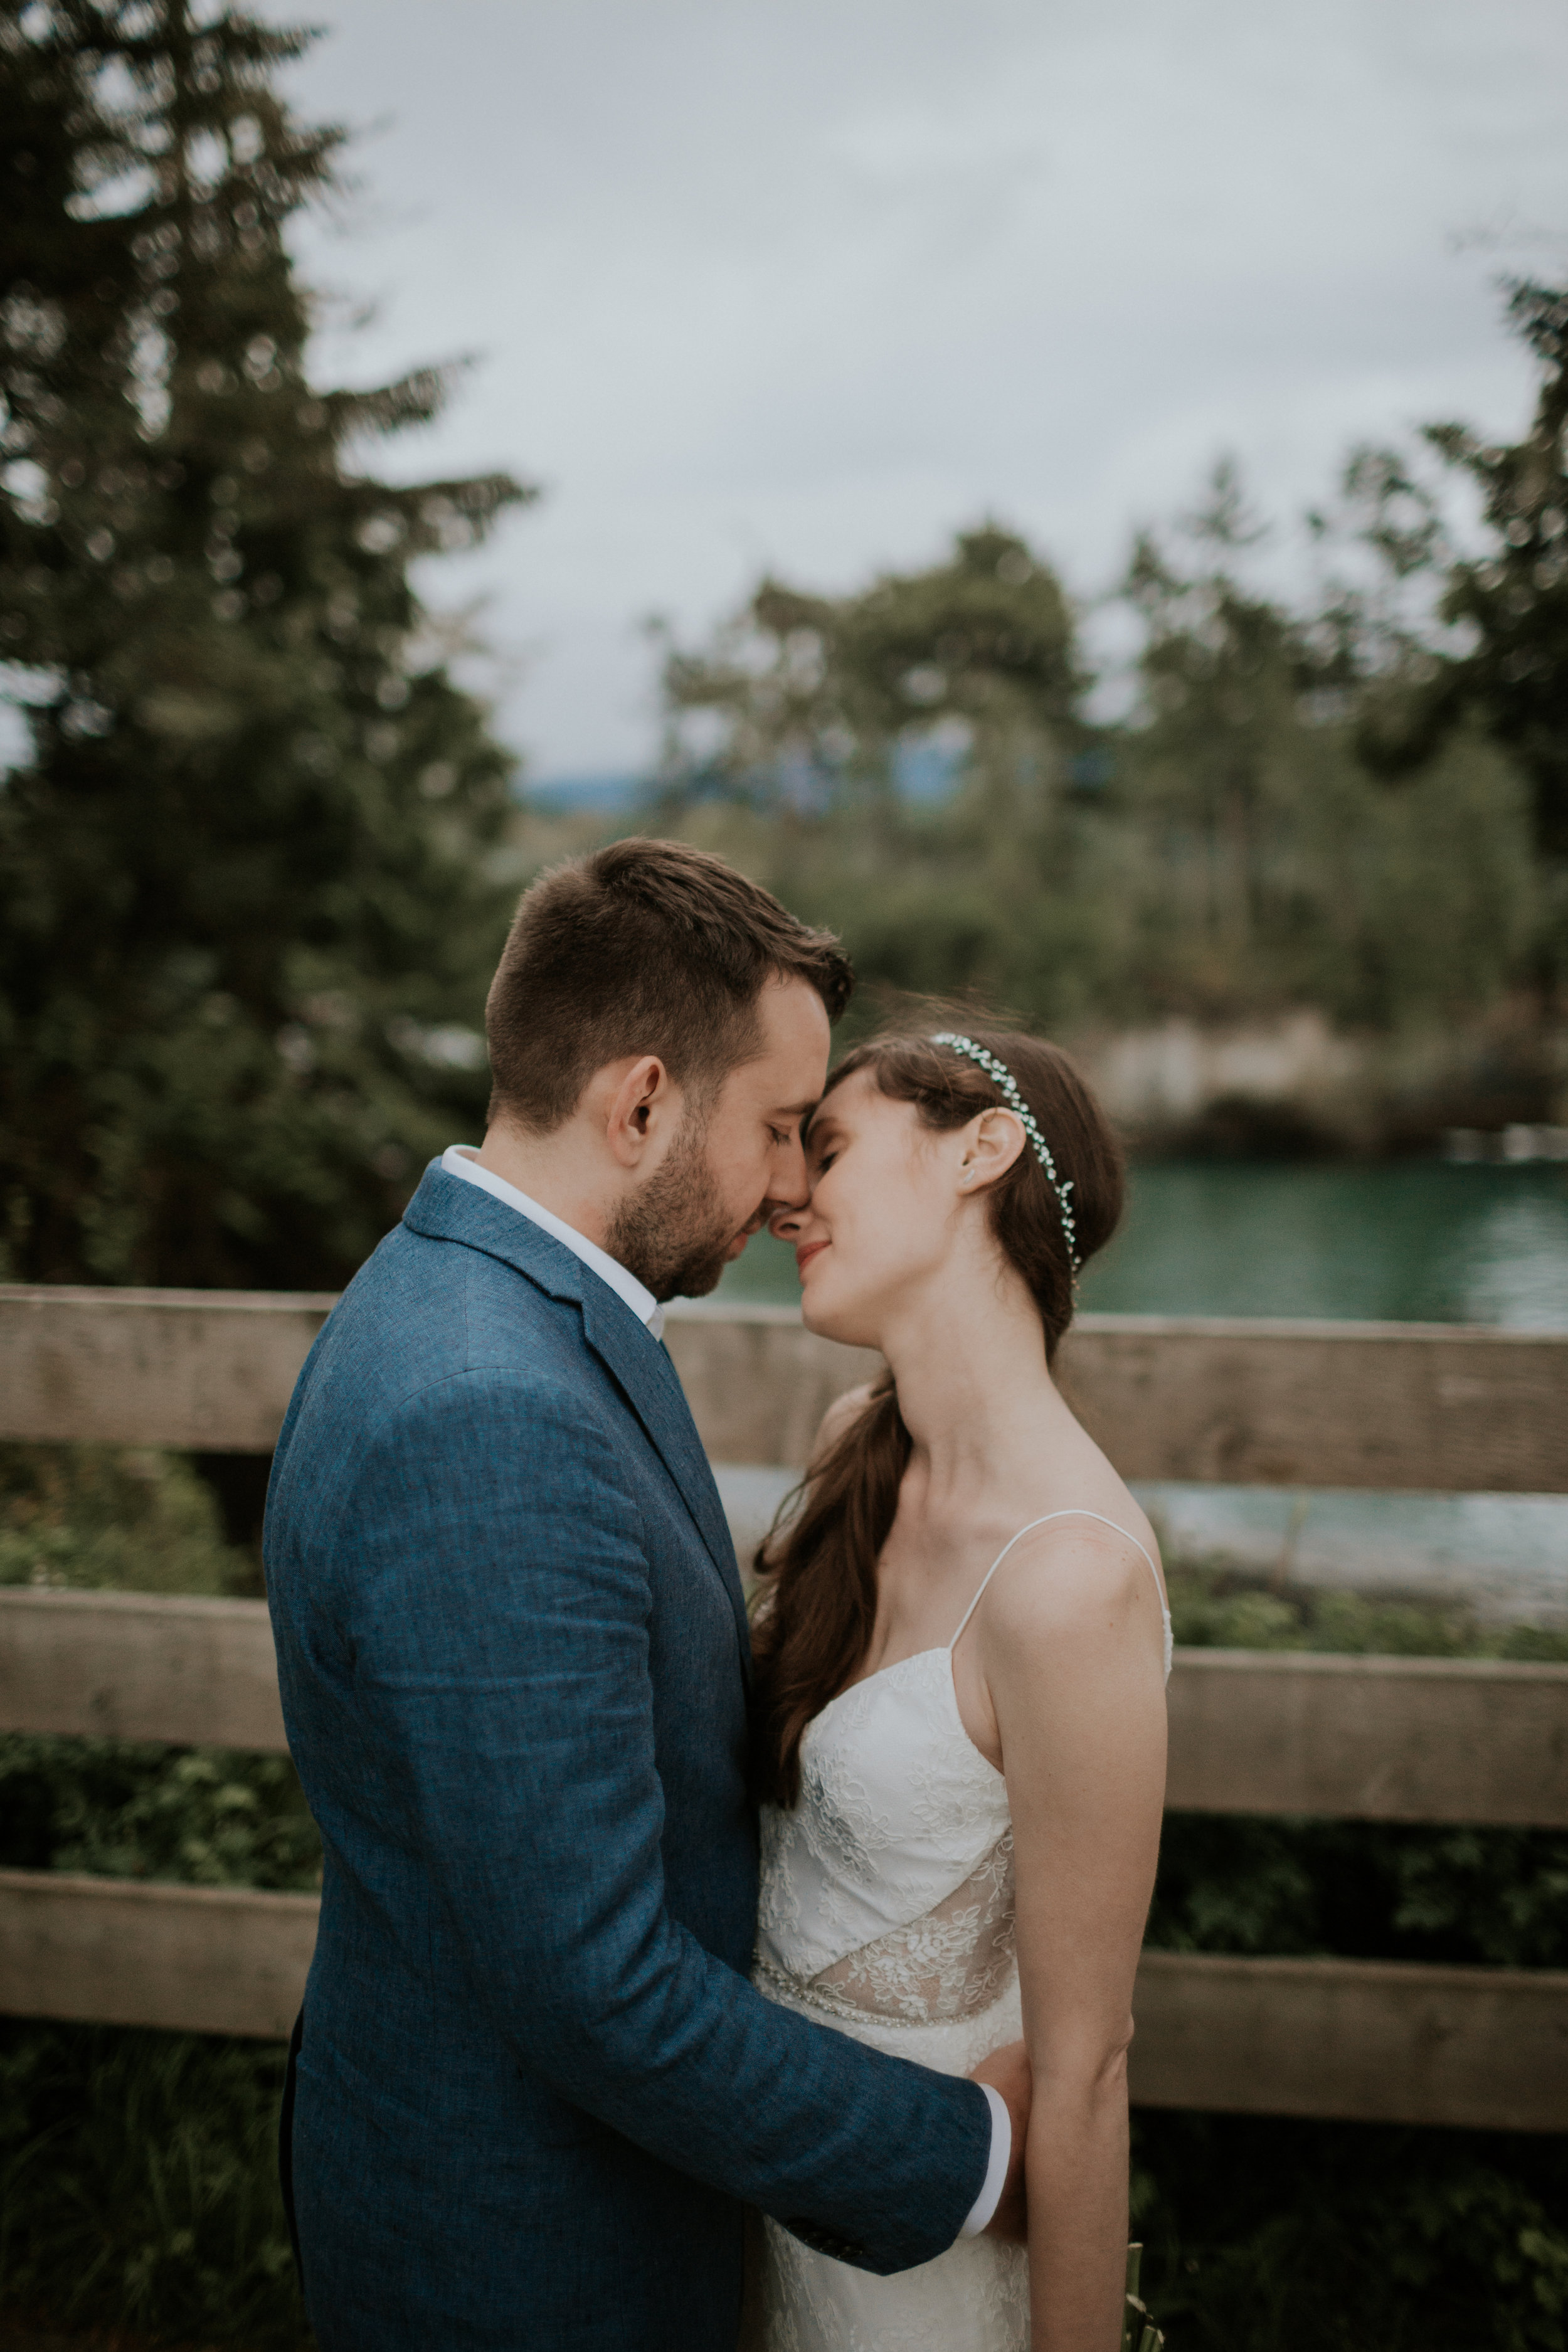 PNW-elopement-wedding-engagement-olympic national park-port angeles-hurricane ridge-lake crescent-kayla dawn photography- photographer-photography-kayladawnphoto-331.jpg